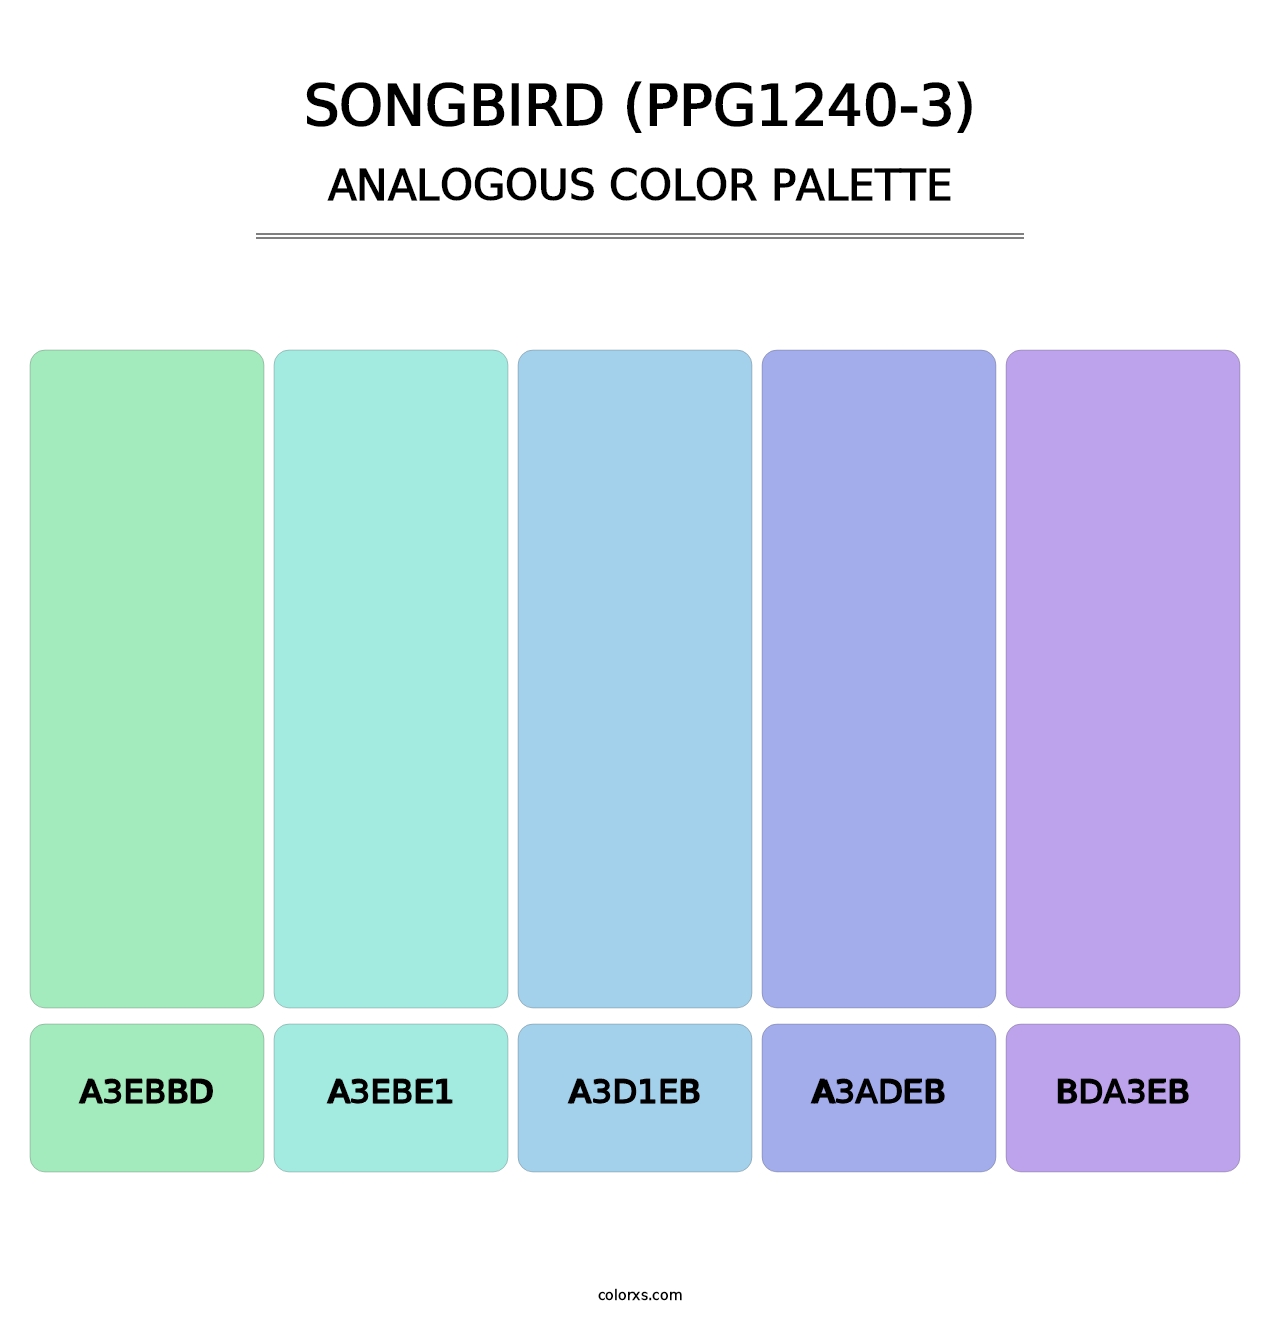 Songbird (PPG1240-3) - Analogous Color Palette